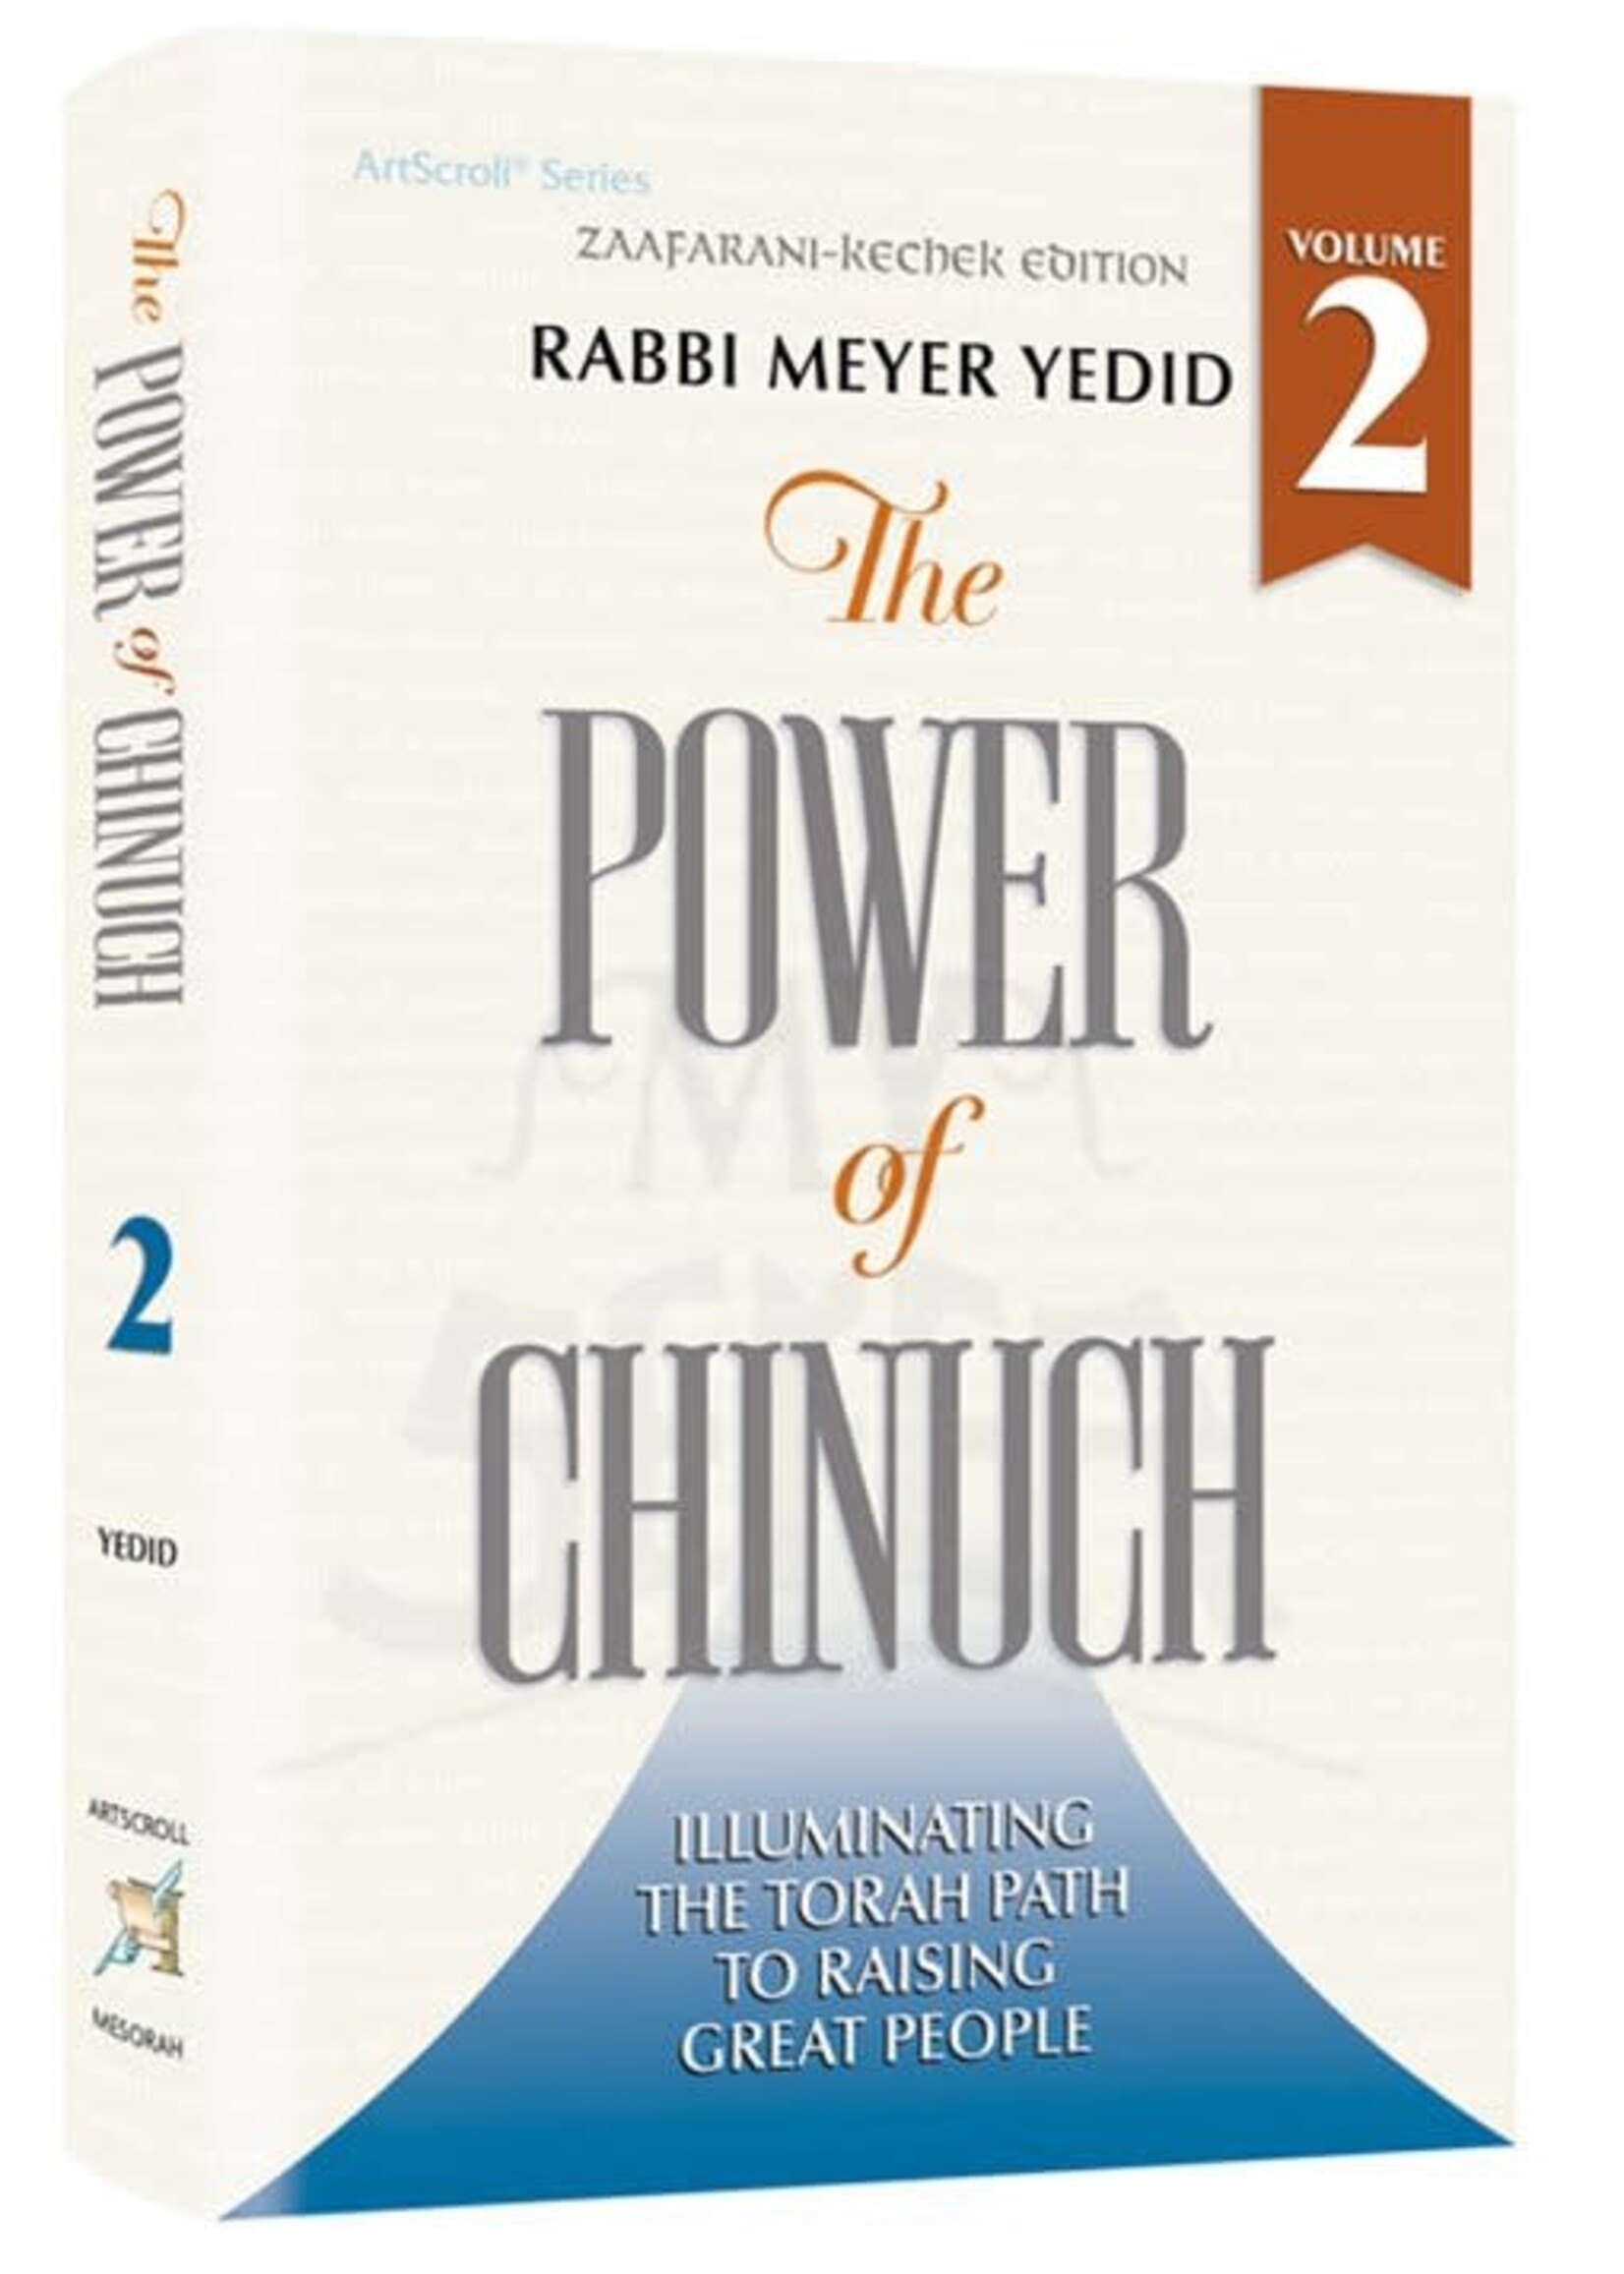 Rabbi Meyer Yedid The Power of Chinuch #2